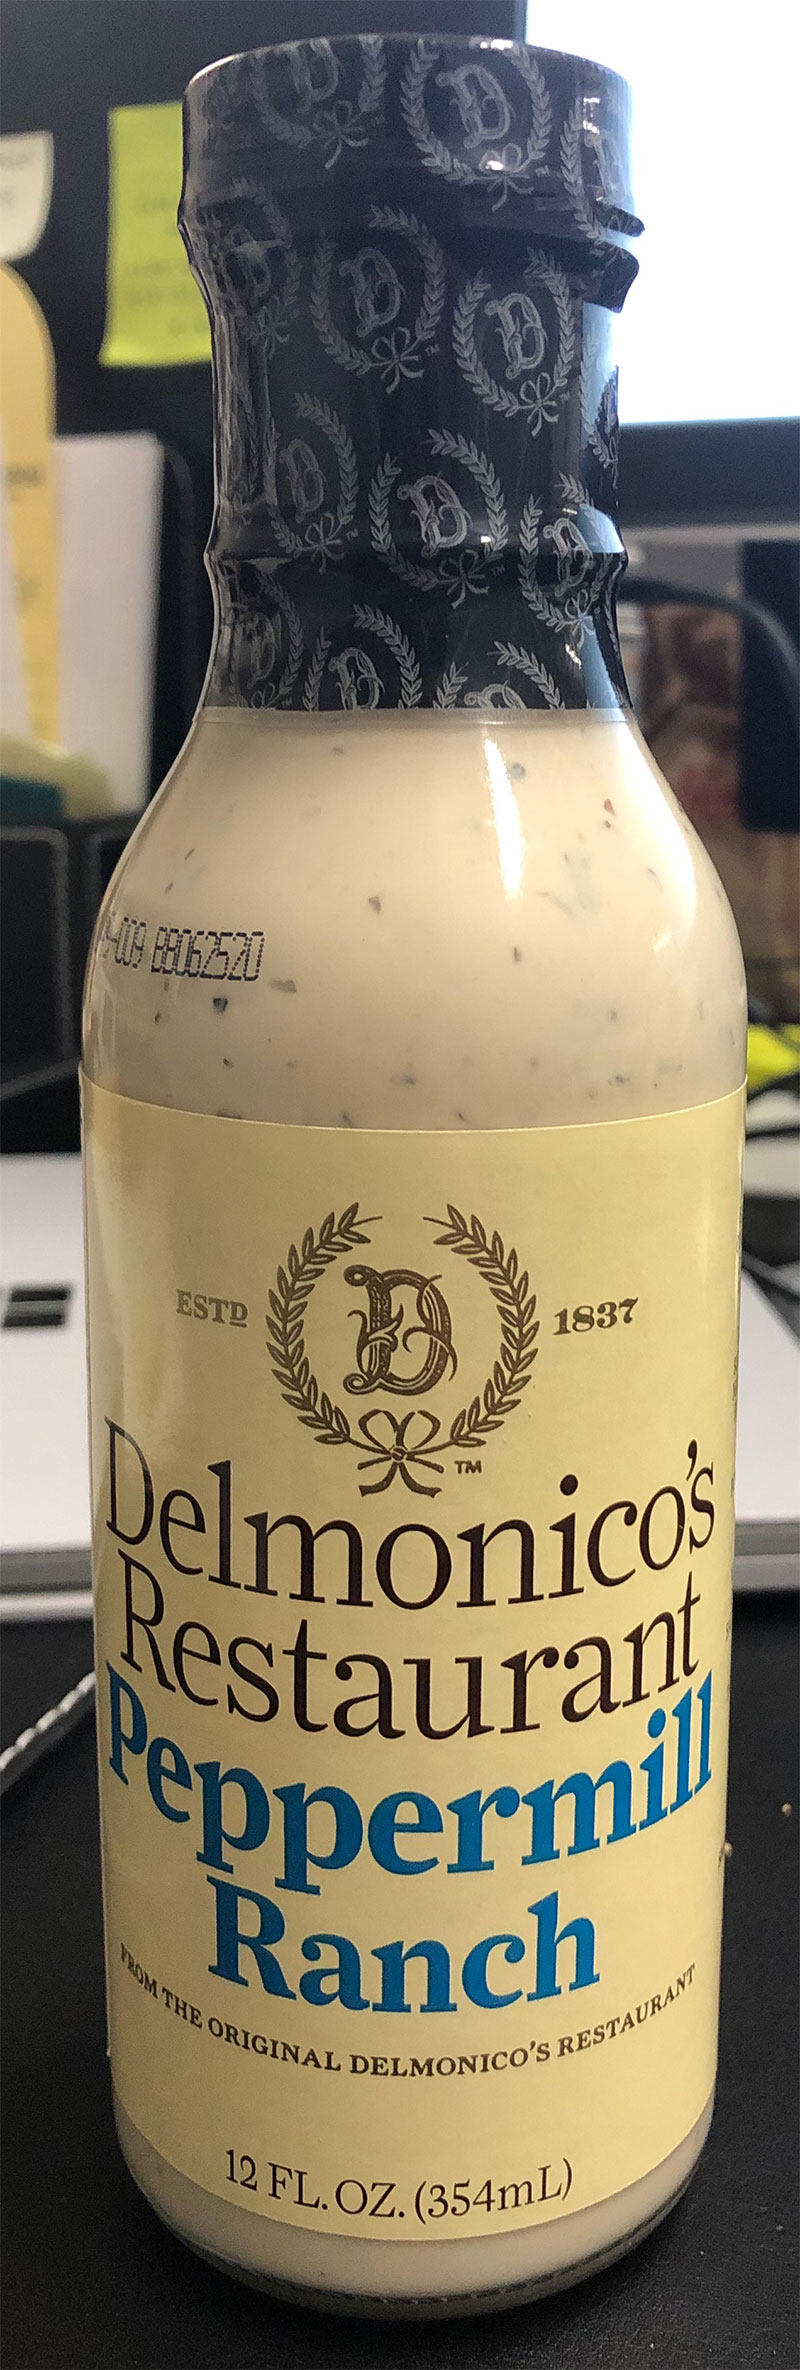 Delmonico's Restaurant: Peppermill Ranch - 354 ml